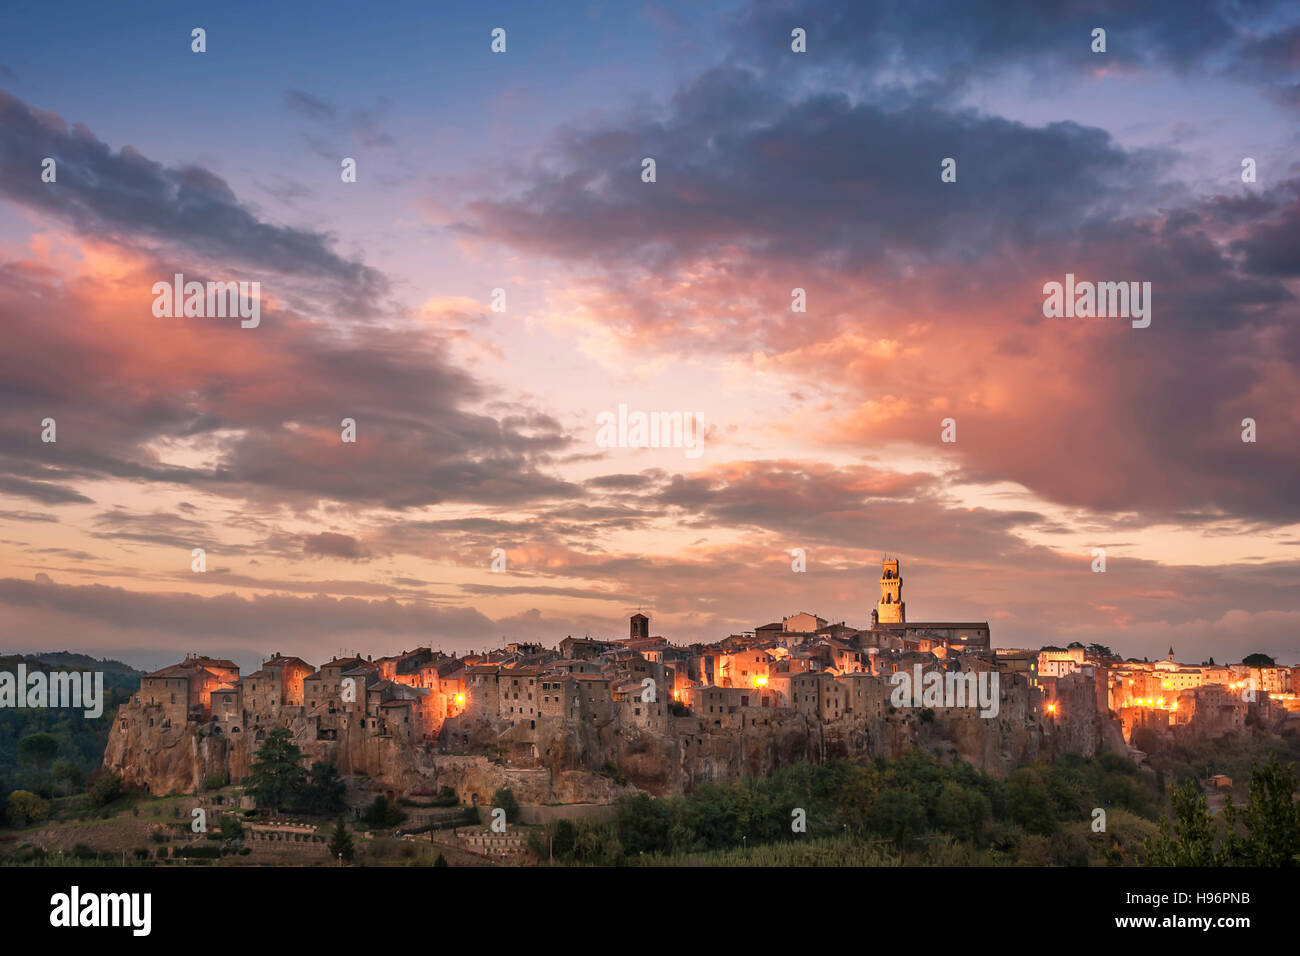 Majestic sunset over ancient Italian town Pitigliano, Tuscany, Italy Stock Photo